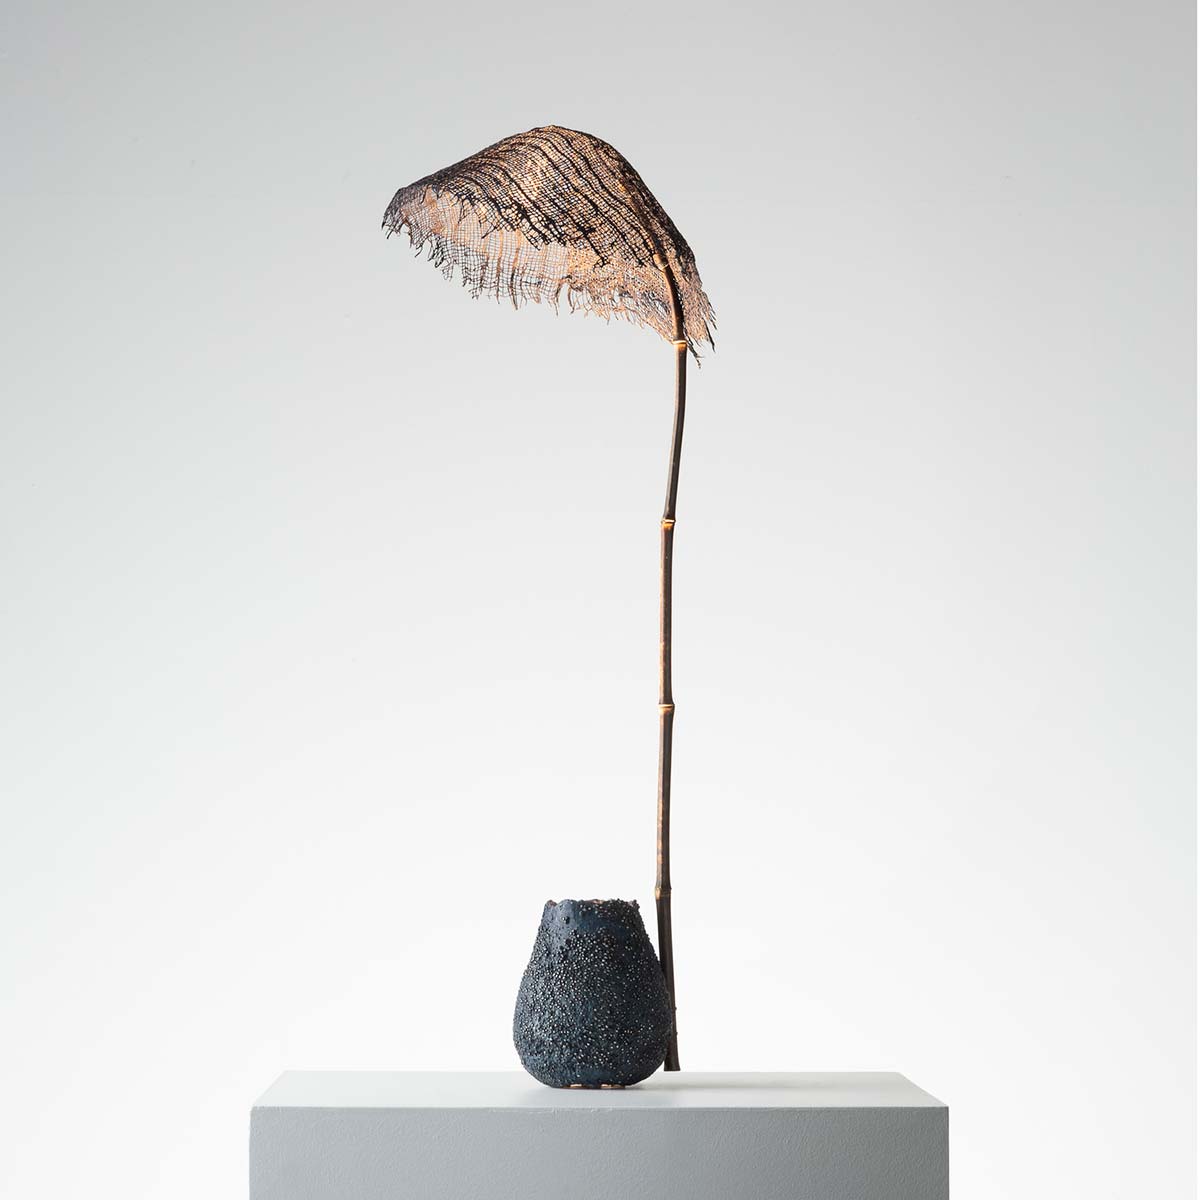 Carpenters Workshop Gallery London, Ishigaki lamp by Aki+Arnaud Cooren